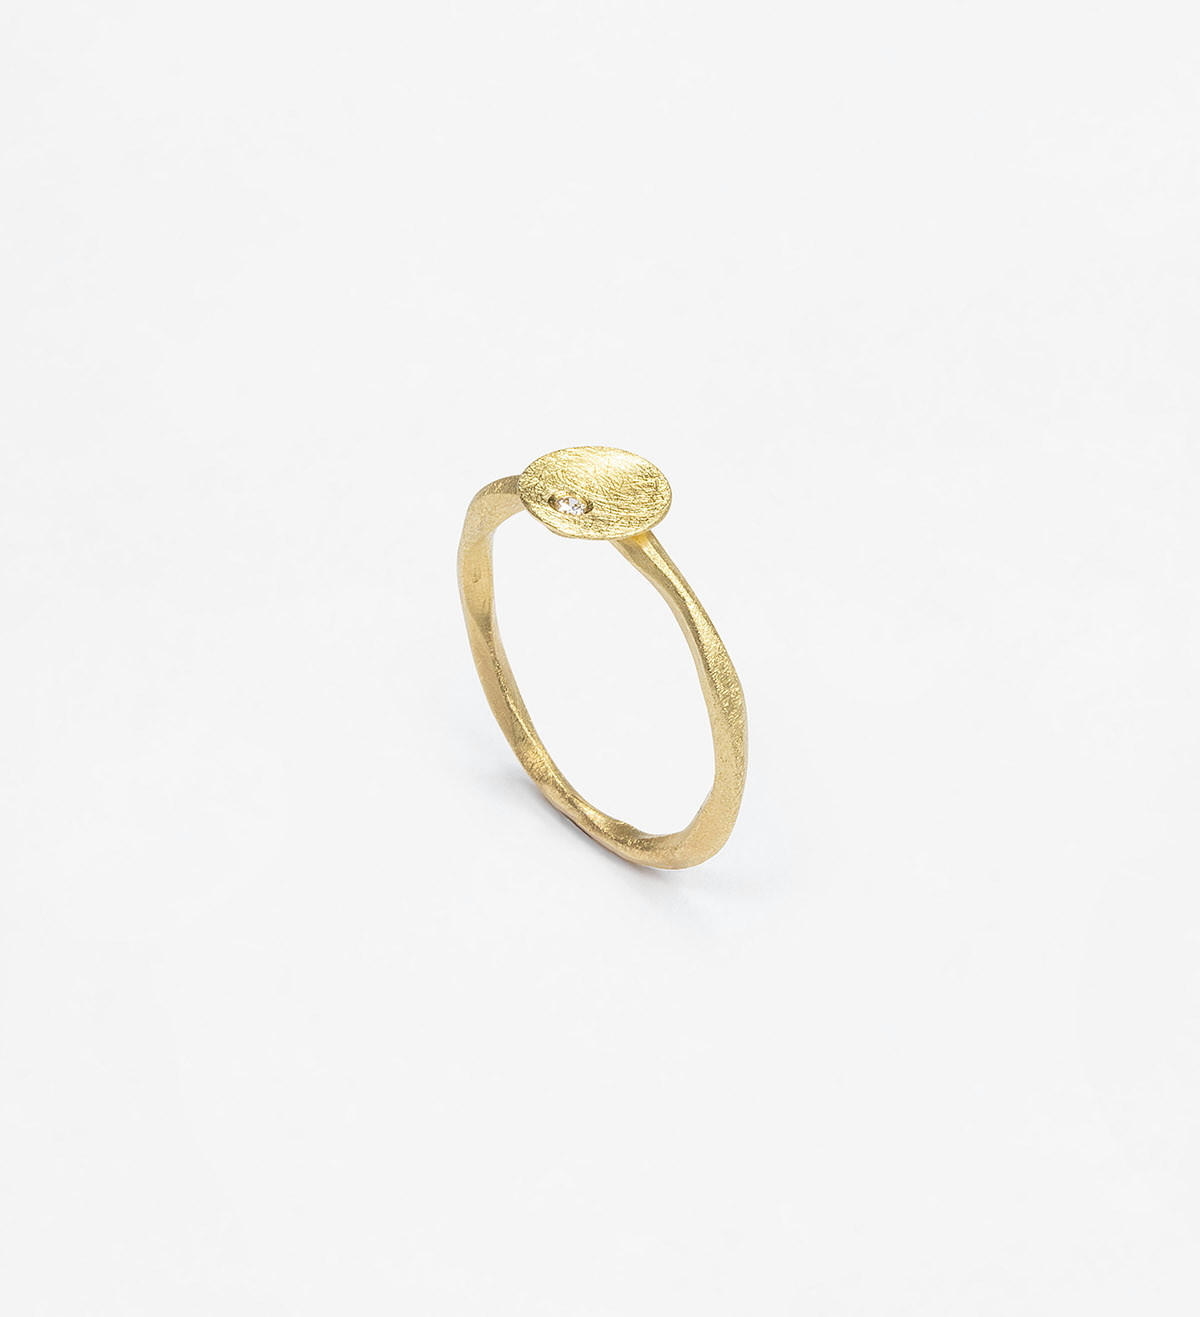 18k gold ring Flô 8mm with diamond 0,025ct